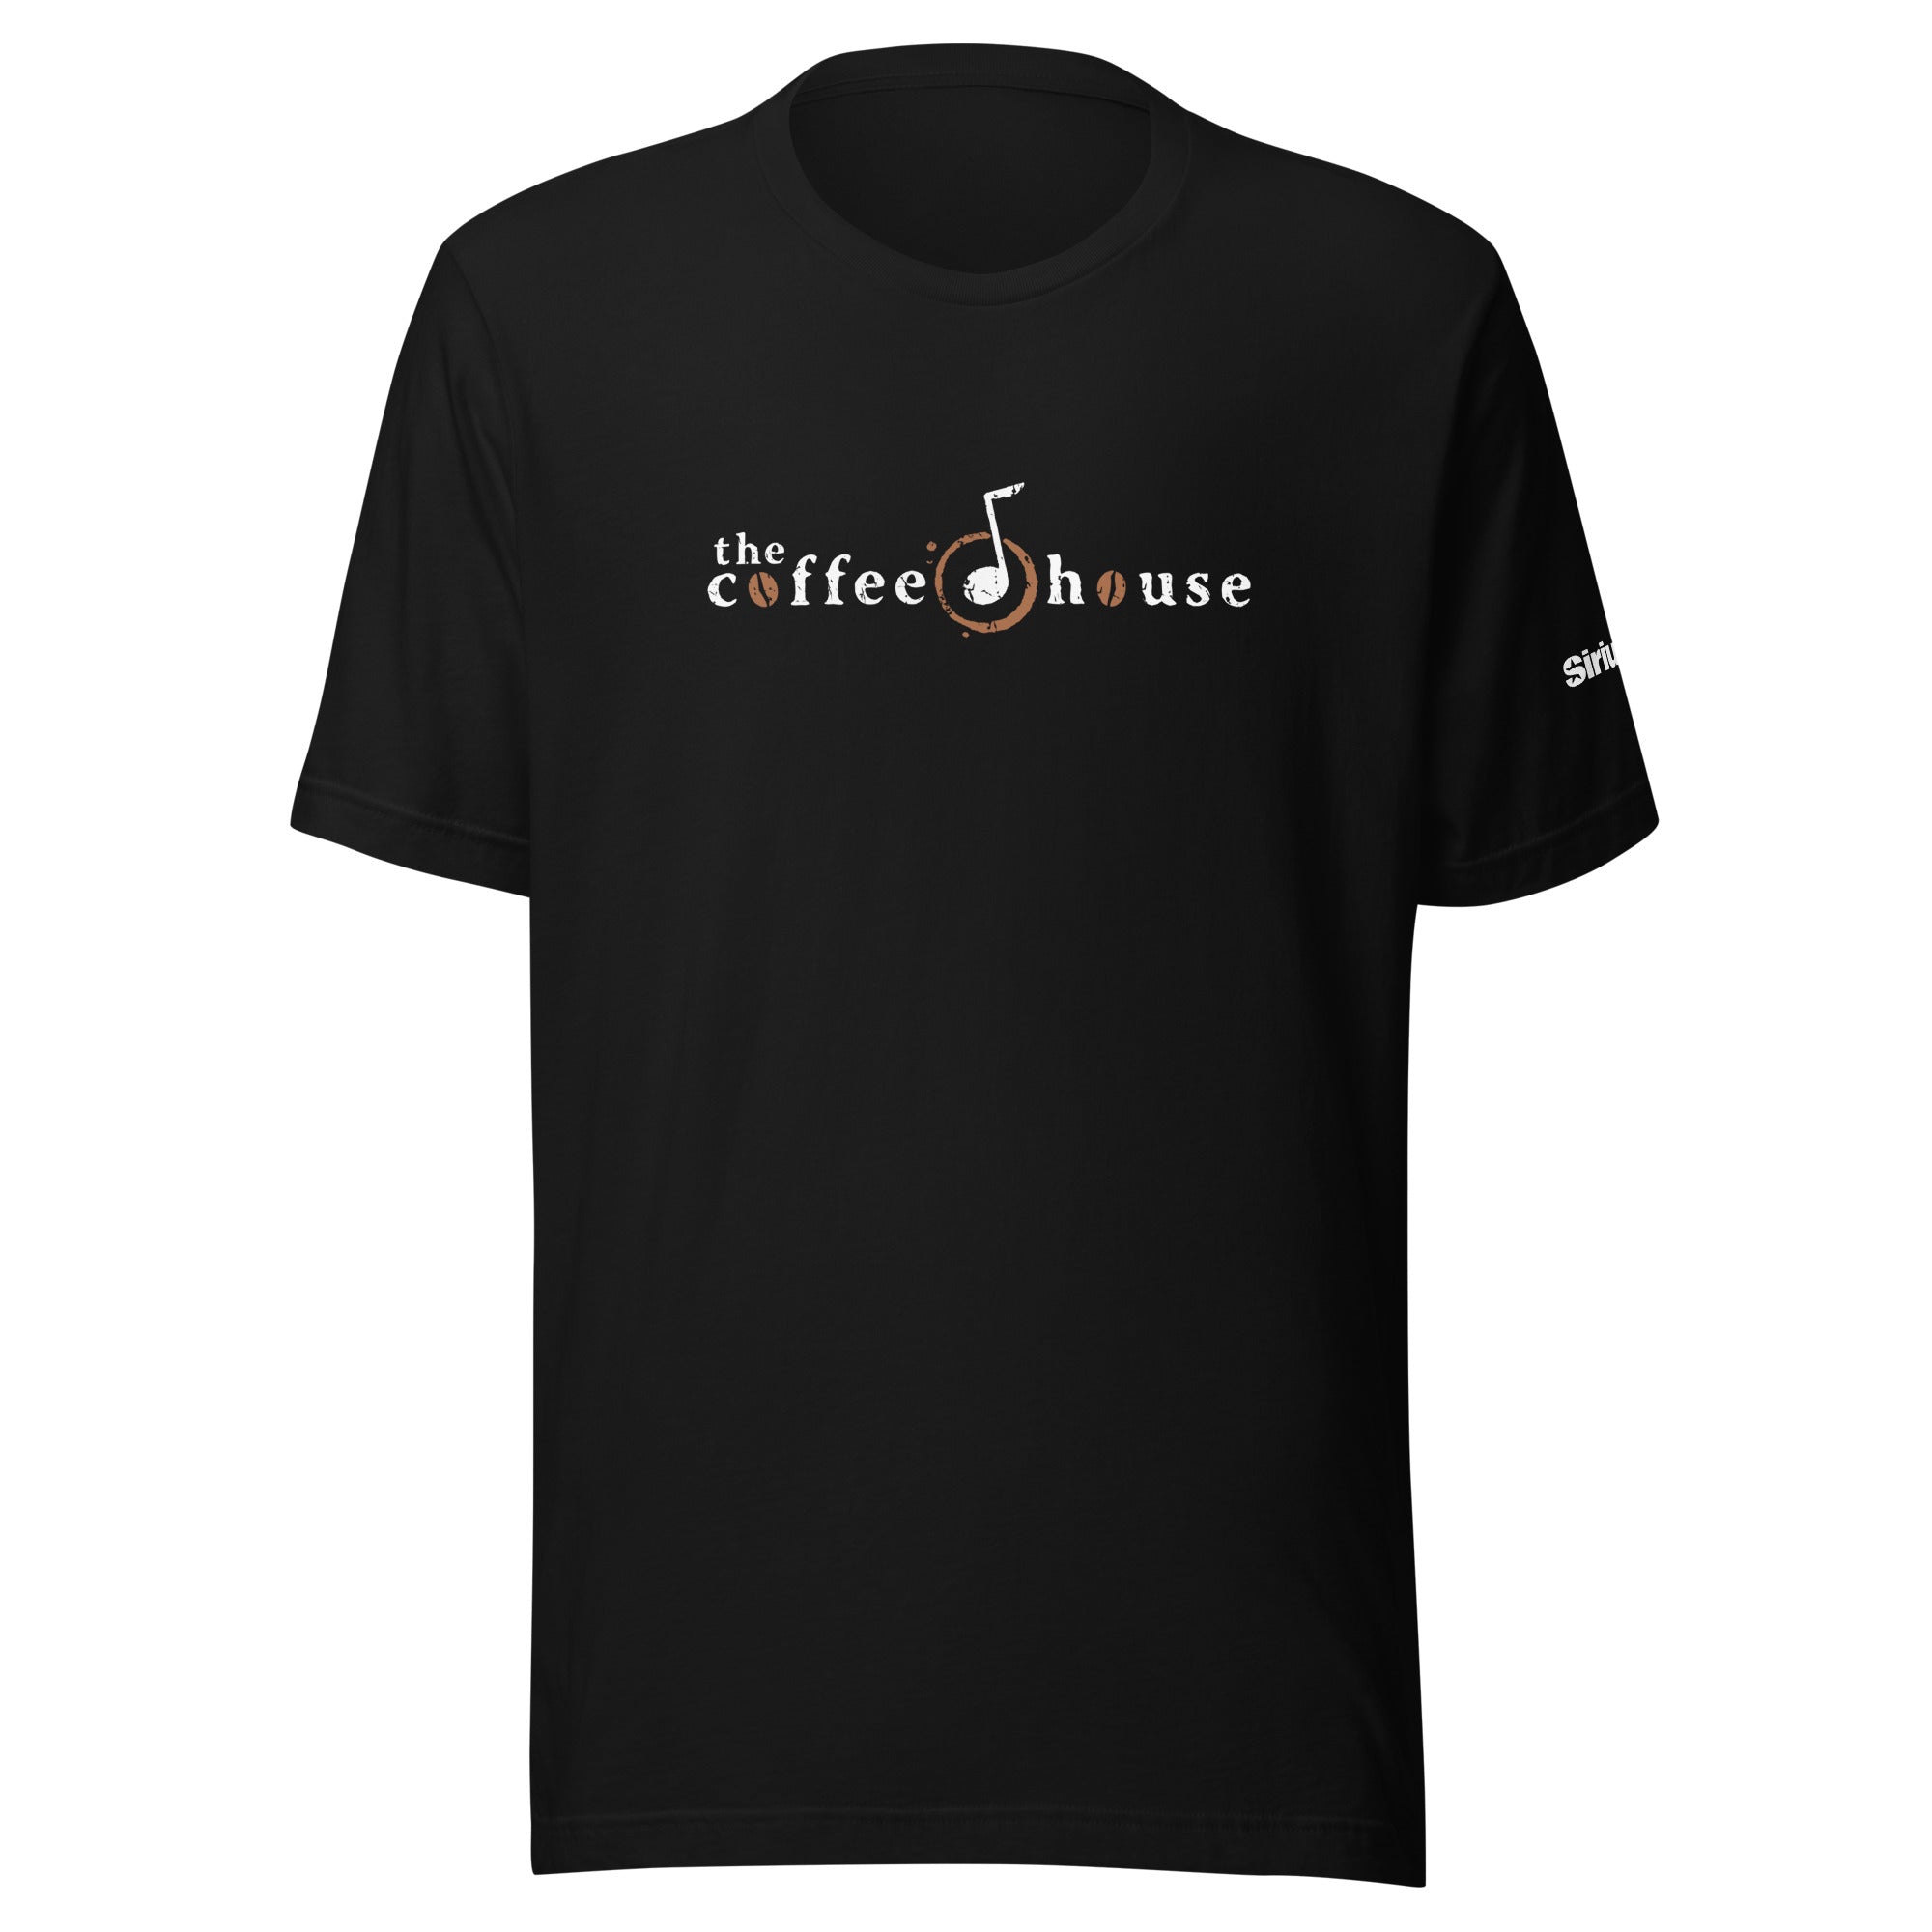 The Coffee House: T-shirt (Black)